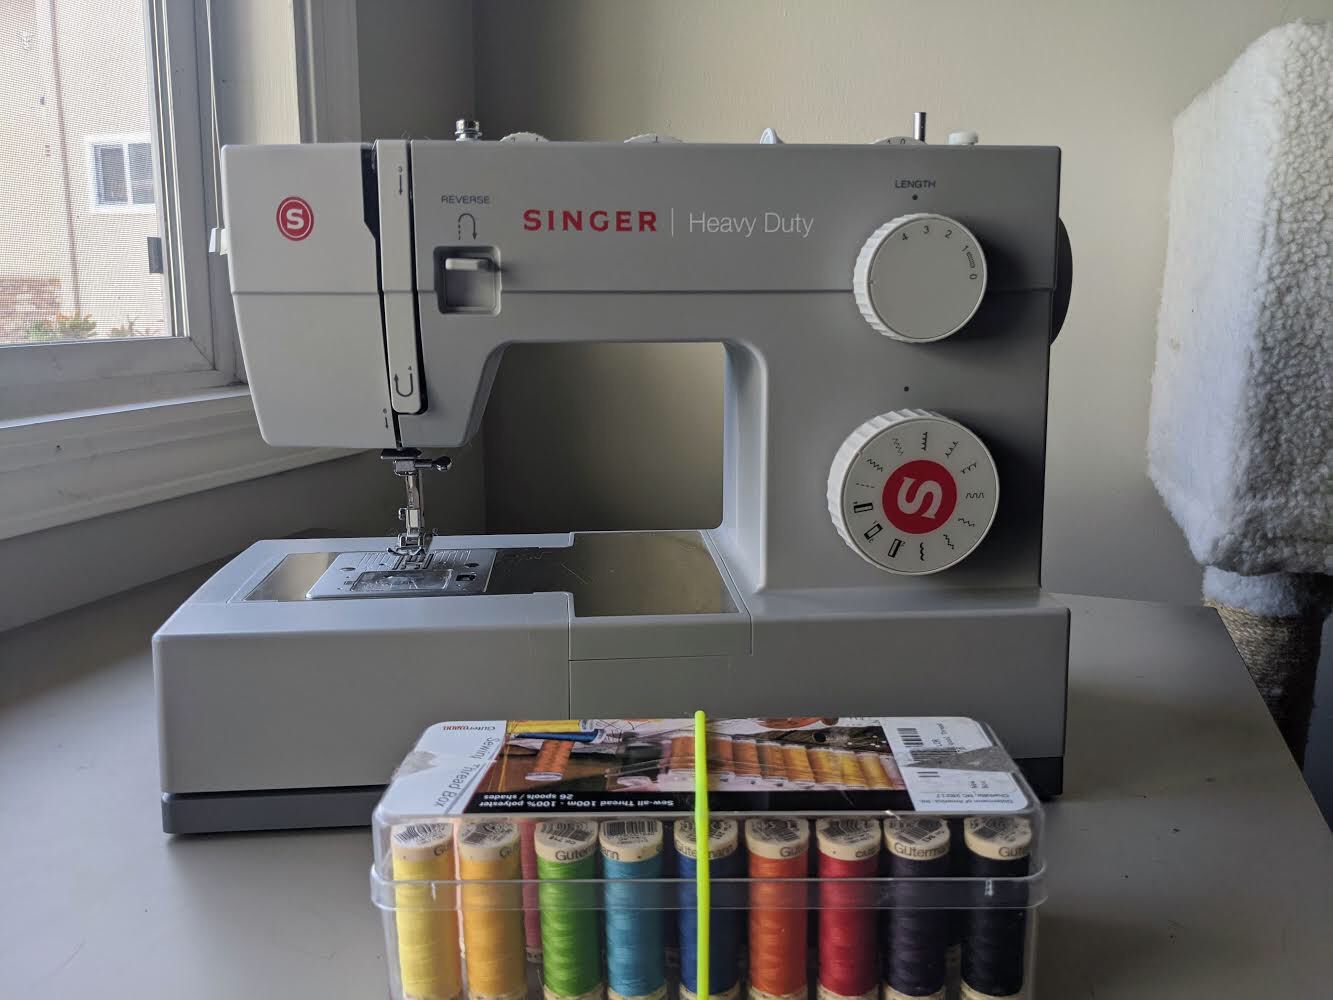 Singer heavy duty 4411 sewing machine